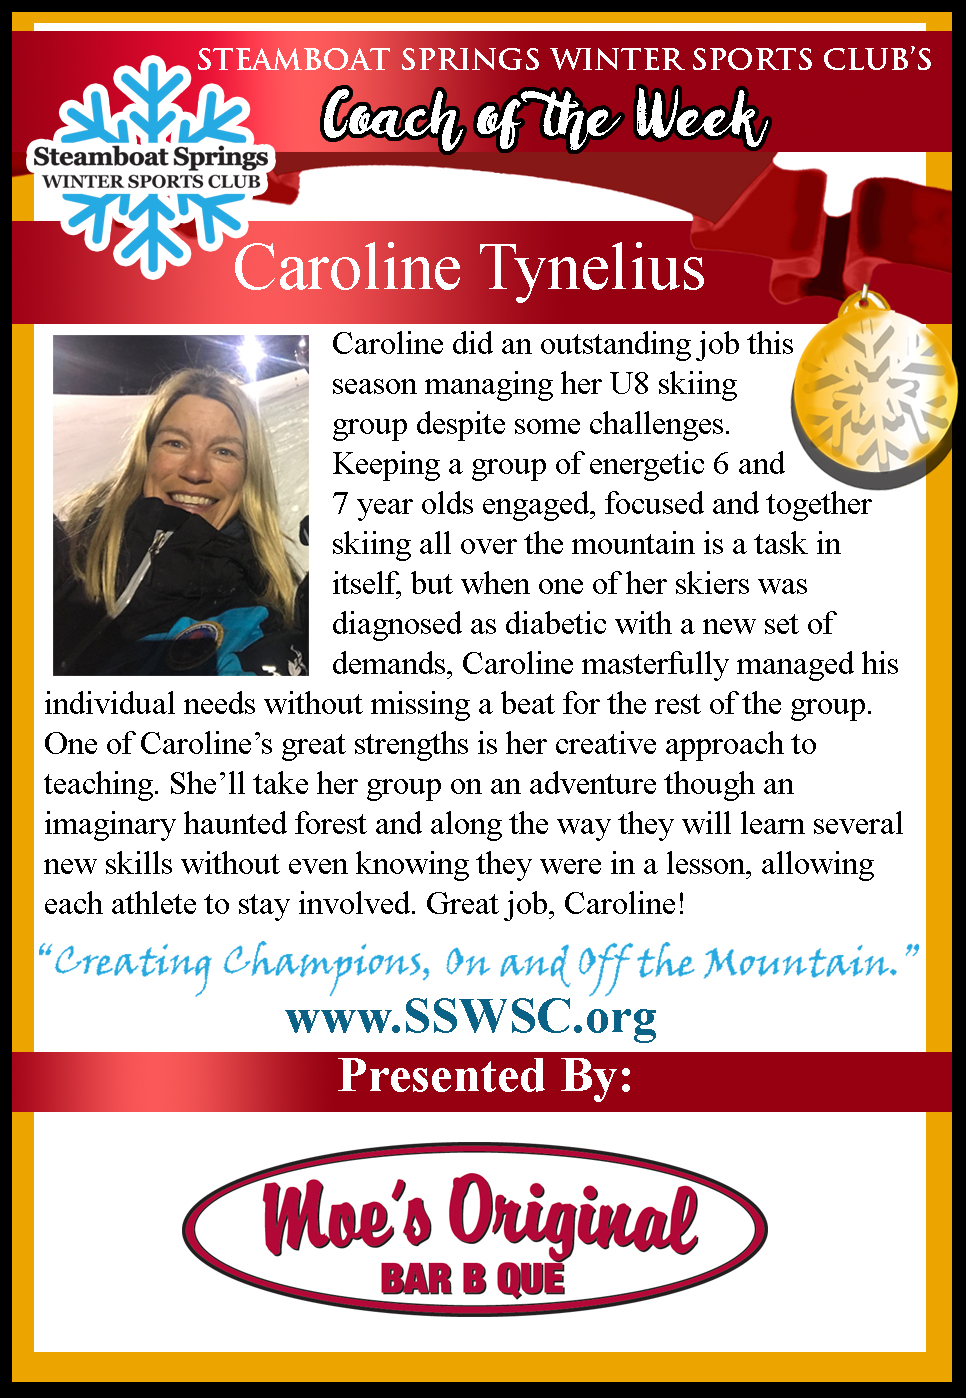 Coach of the Week Caroline Tynelius